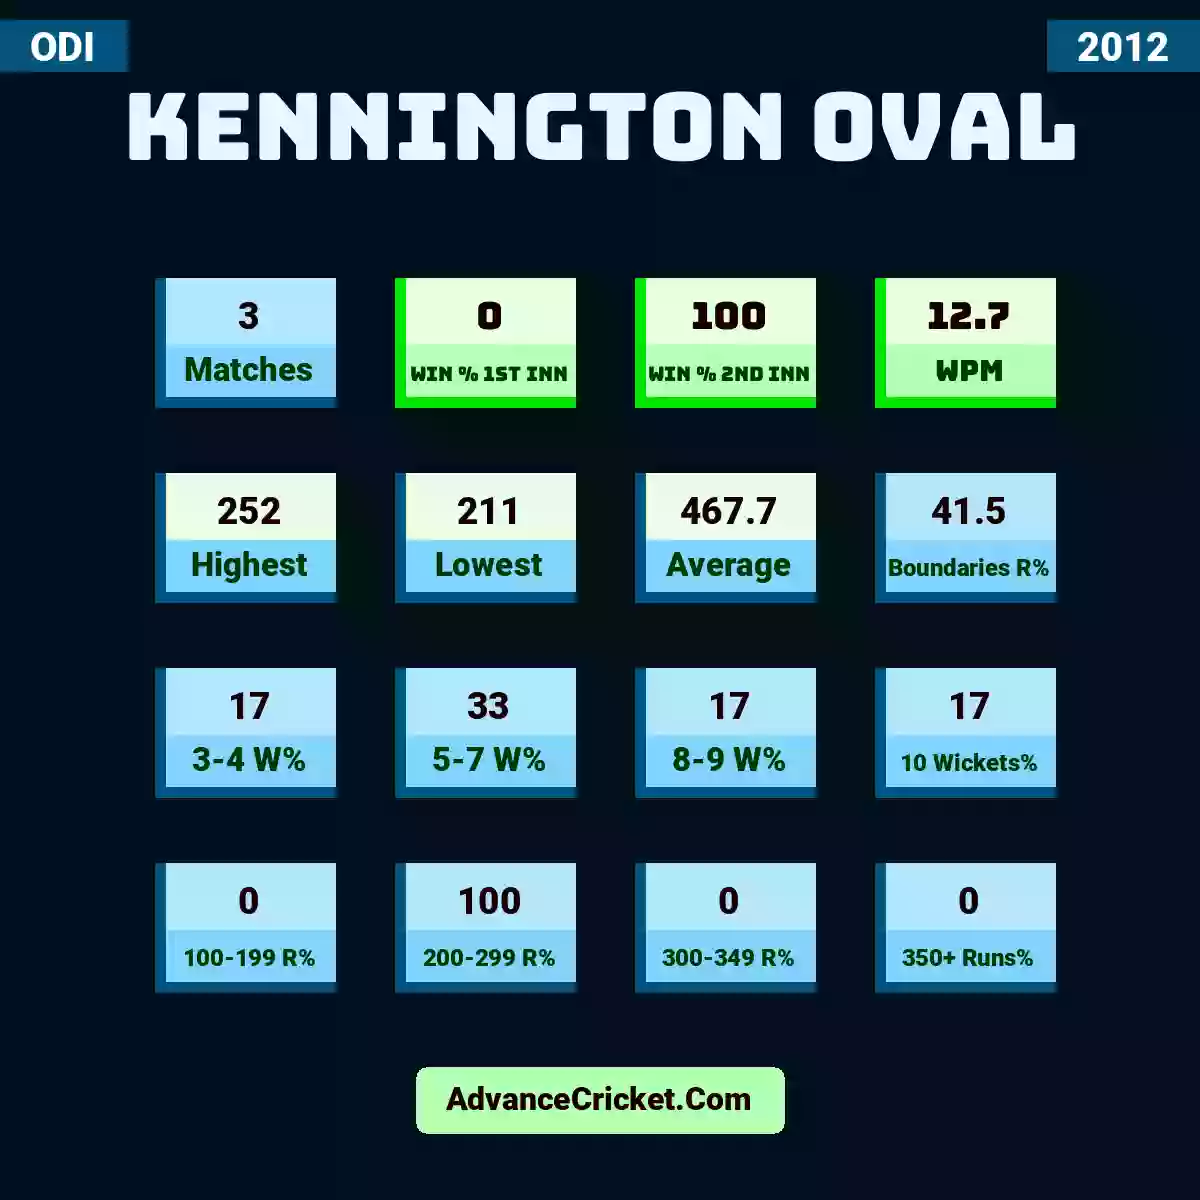 Image showing Kennington Oval with Matches: 3, Win % 1st Inn: 0, Win % 2nd Inn: 100, WPM: 12.7, Highest: 252, Lowest: 211, Average: 467.7, Boundaries R%: 41.5, 3-4 W%: 17, 5-7 W%: 33, 8-9 W%: 17, 10 Wickets%: 17, 100-199 R%: 0, 200-299 R%: 100, 300-349 R%: 0, 350+ Runs%: 0.